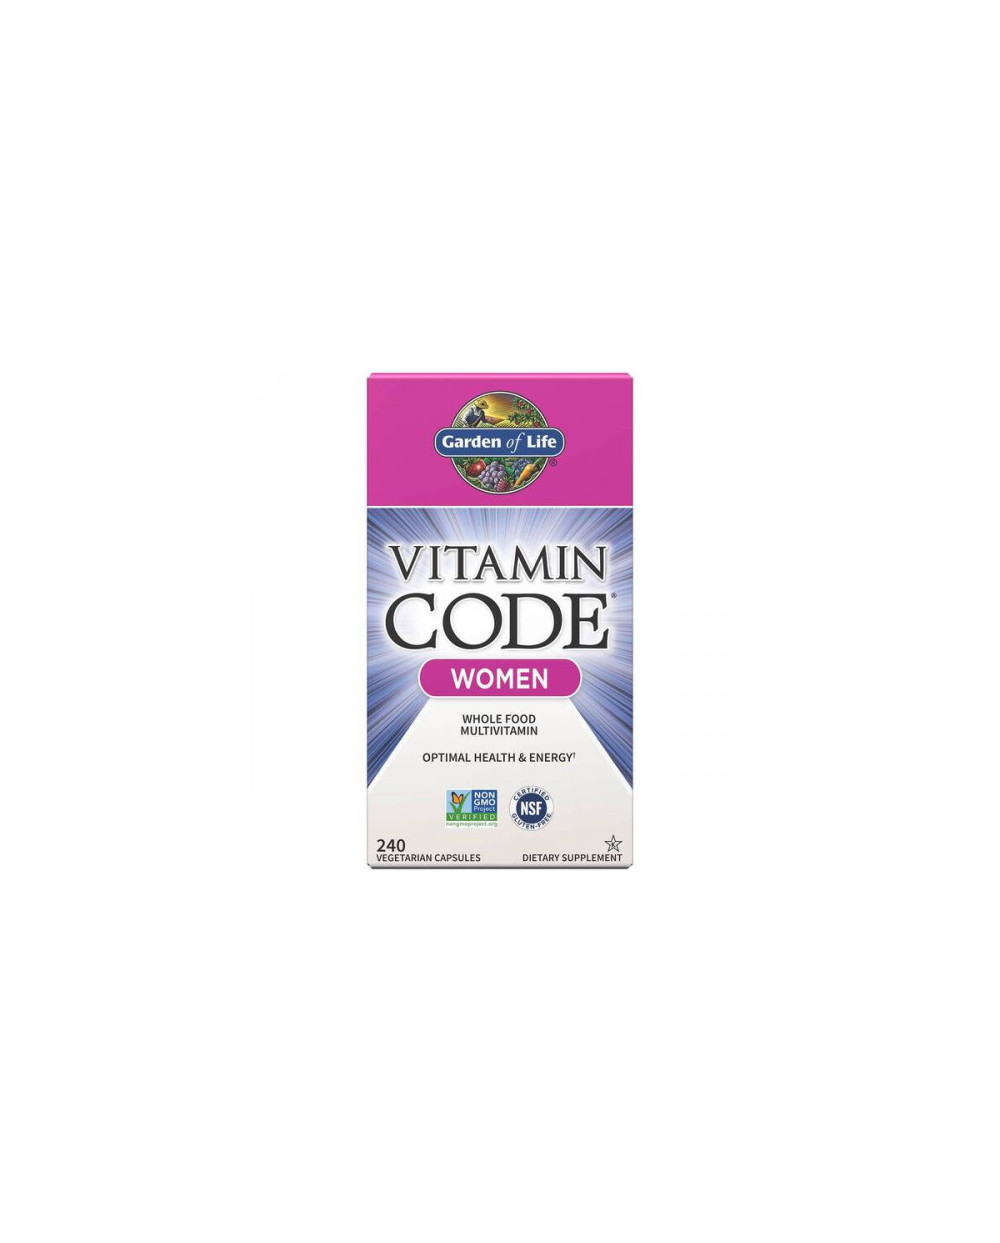 Vitamin Code Women - 240 vcaps